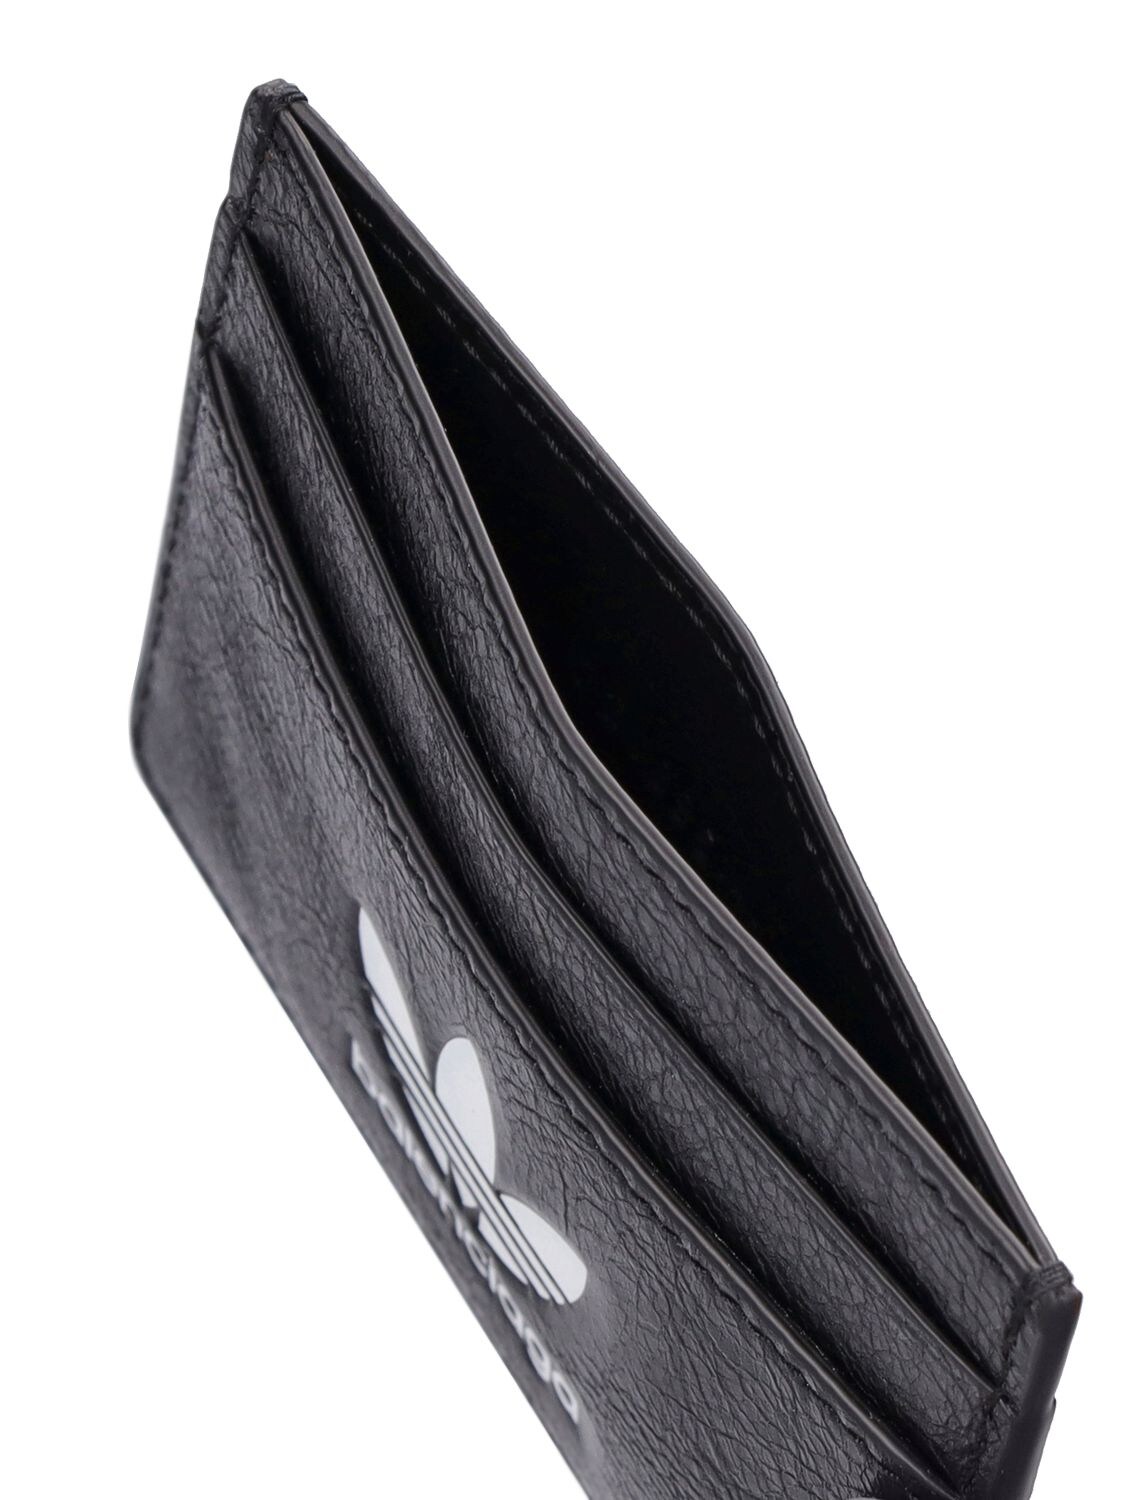 Shop Balenciaga Adidas Card Holder In Black,white